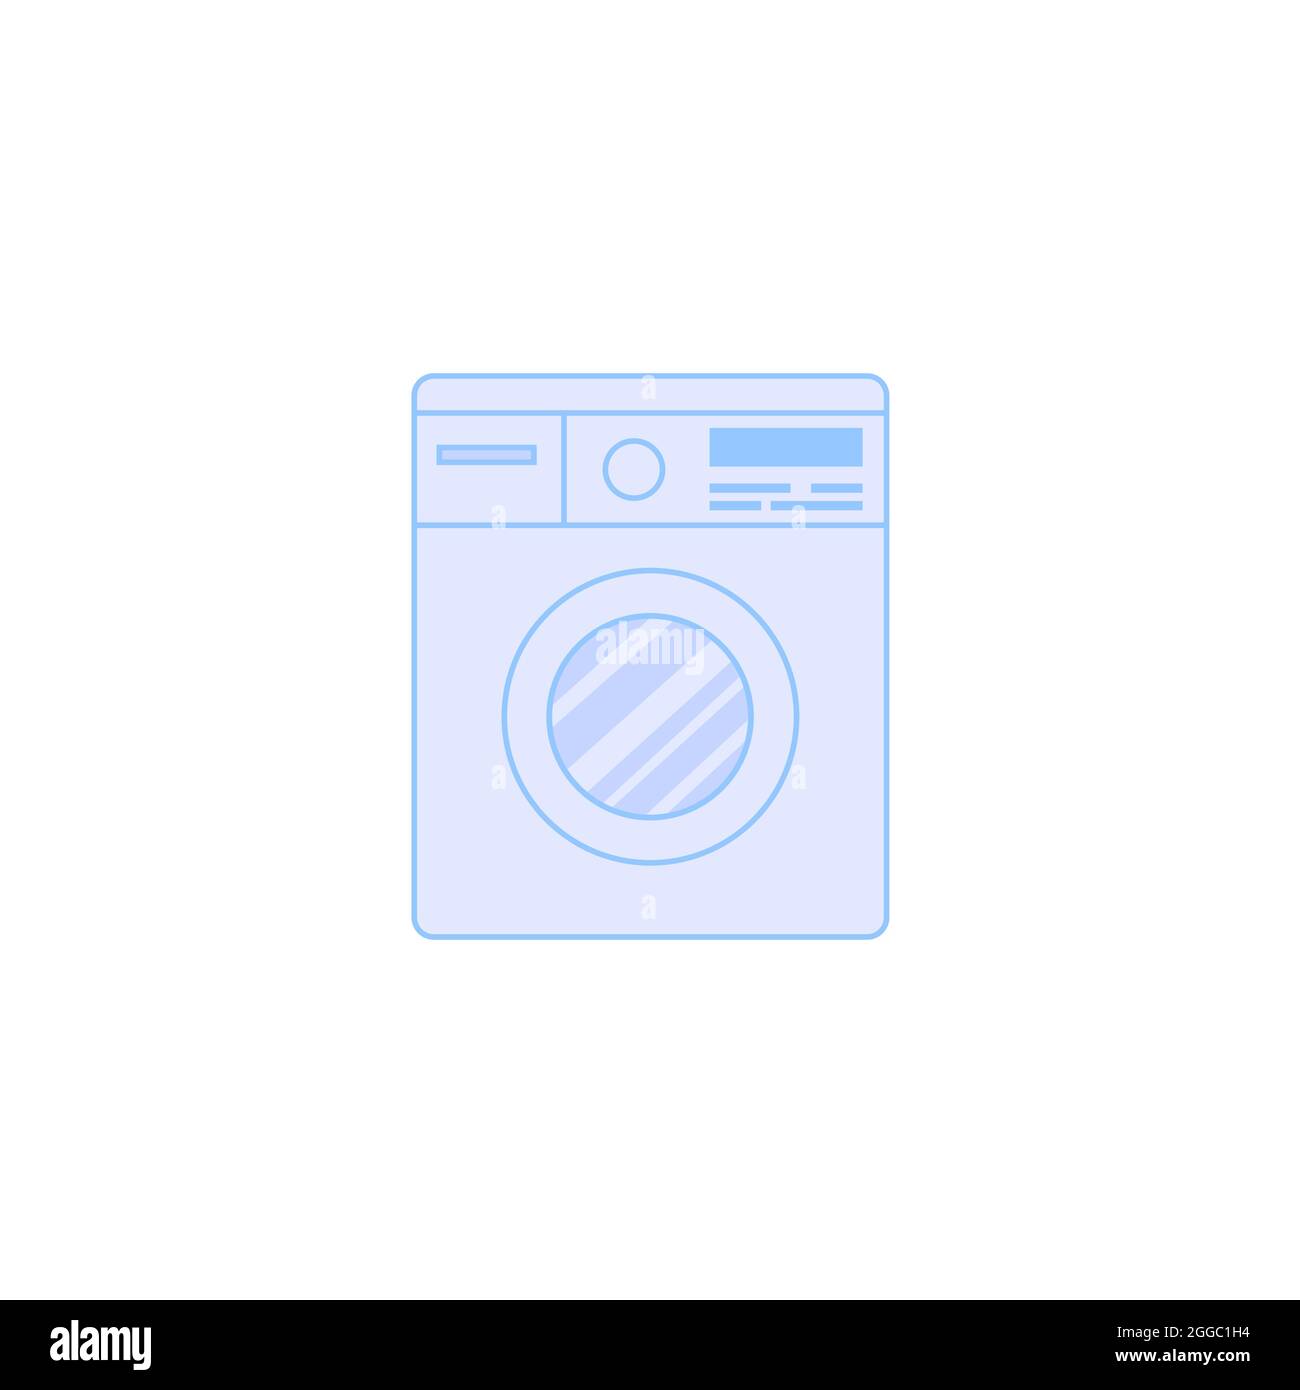 Flat Cartoon Waschmaschine, Haushaltsgeräte, Innenelement Vektor Illustration Konzept Stock Vektor